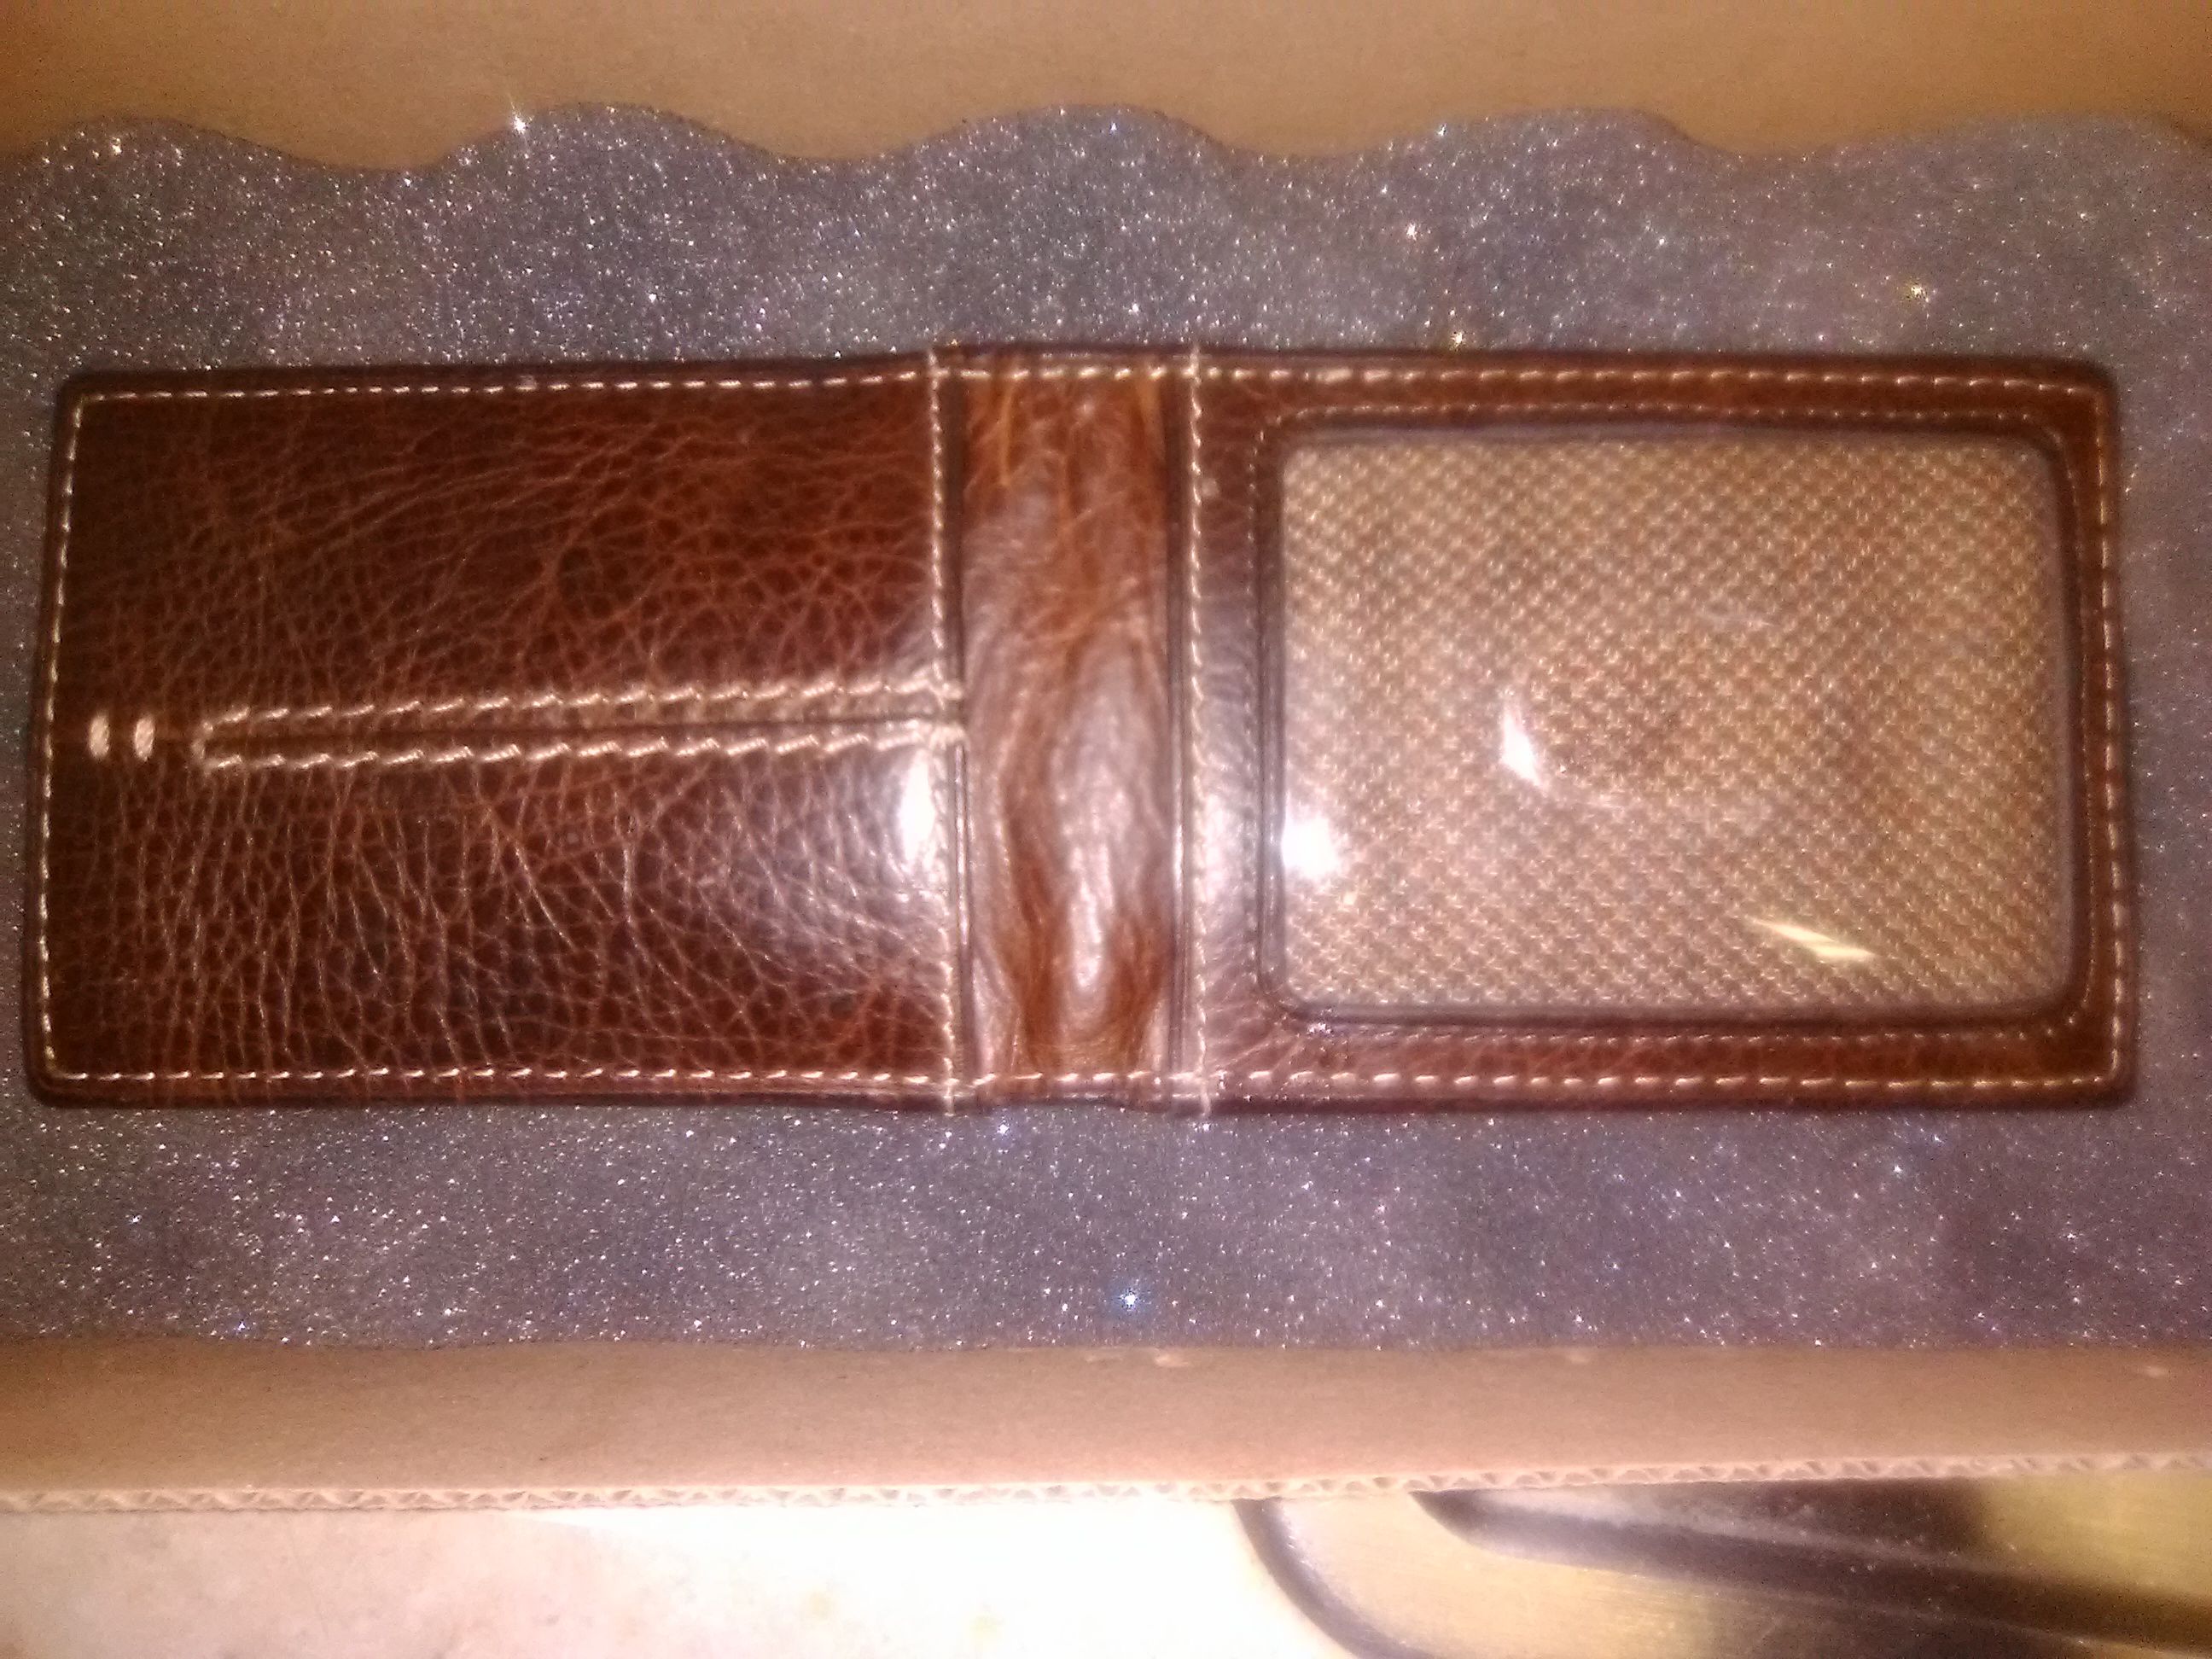 Men's Leather Wallets for sale in Salt Lake City, Utah